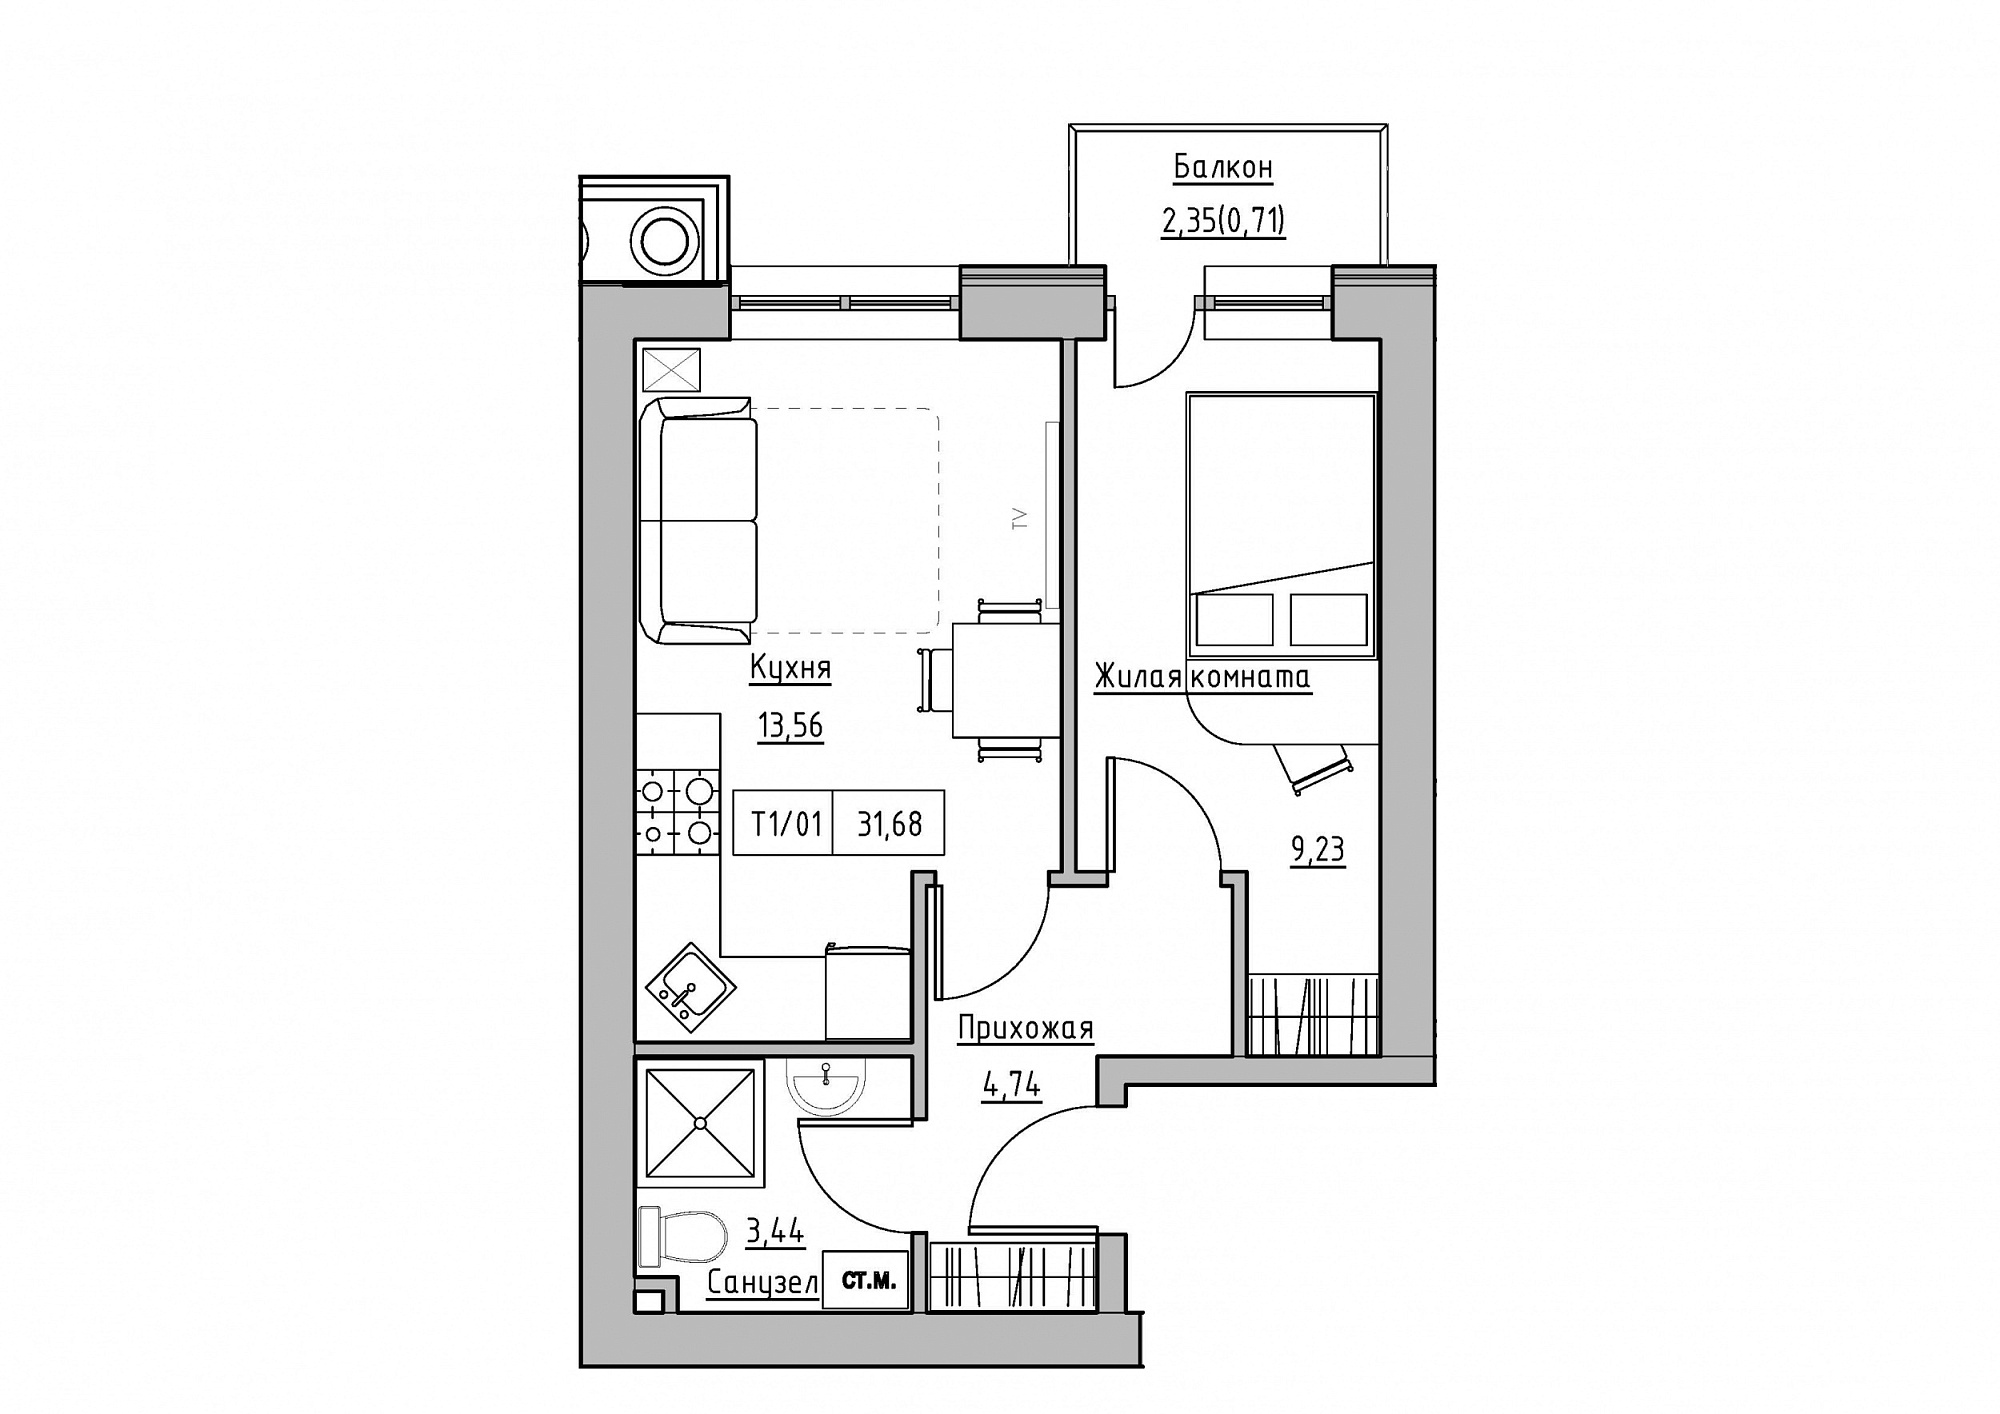 Planning 1-rm flats area 31.68m2, KS-011-03/0013.